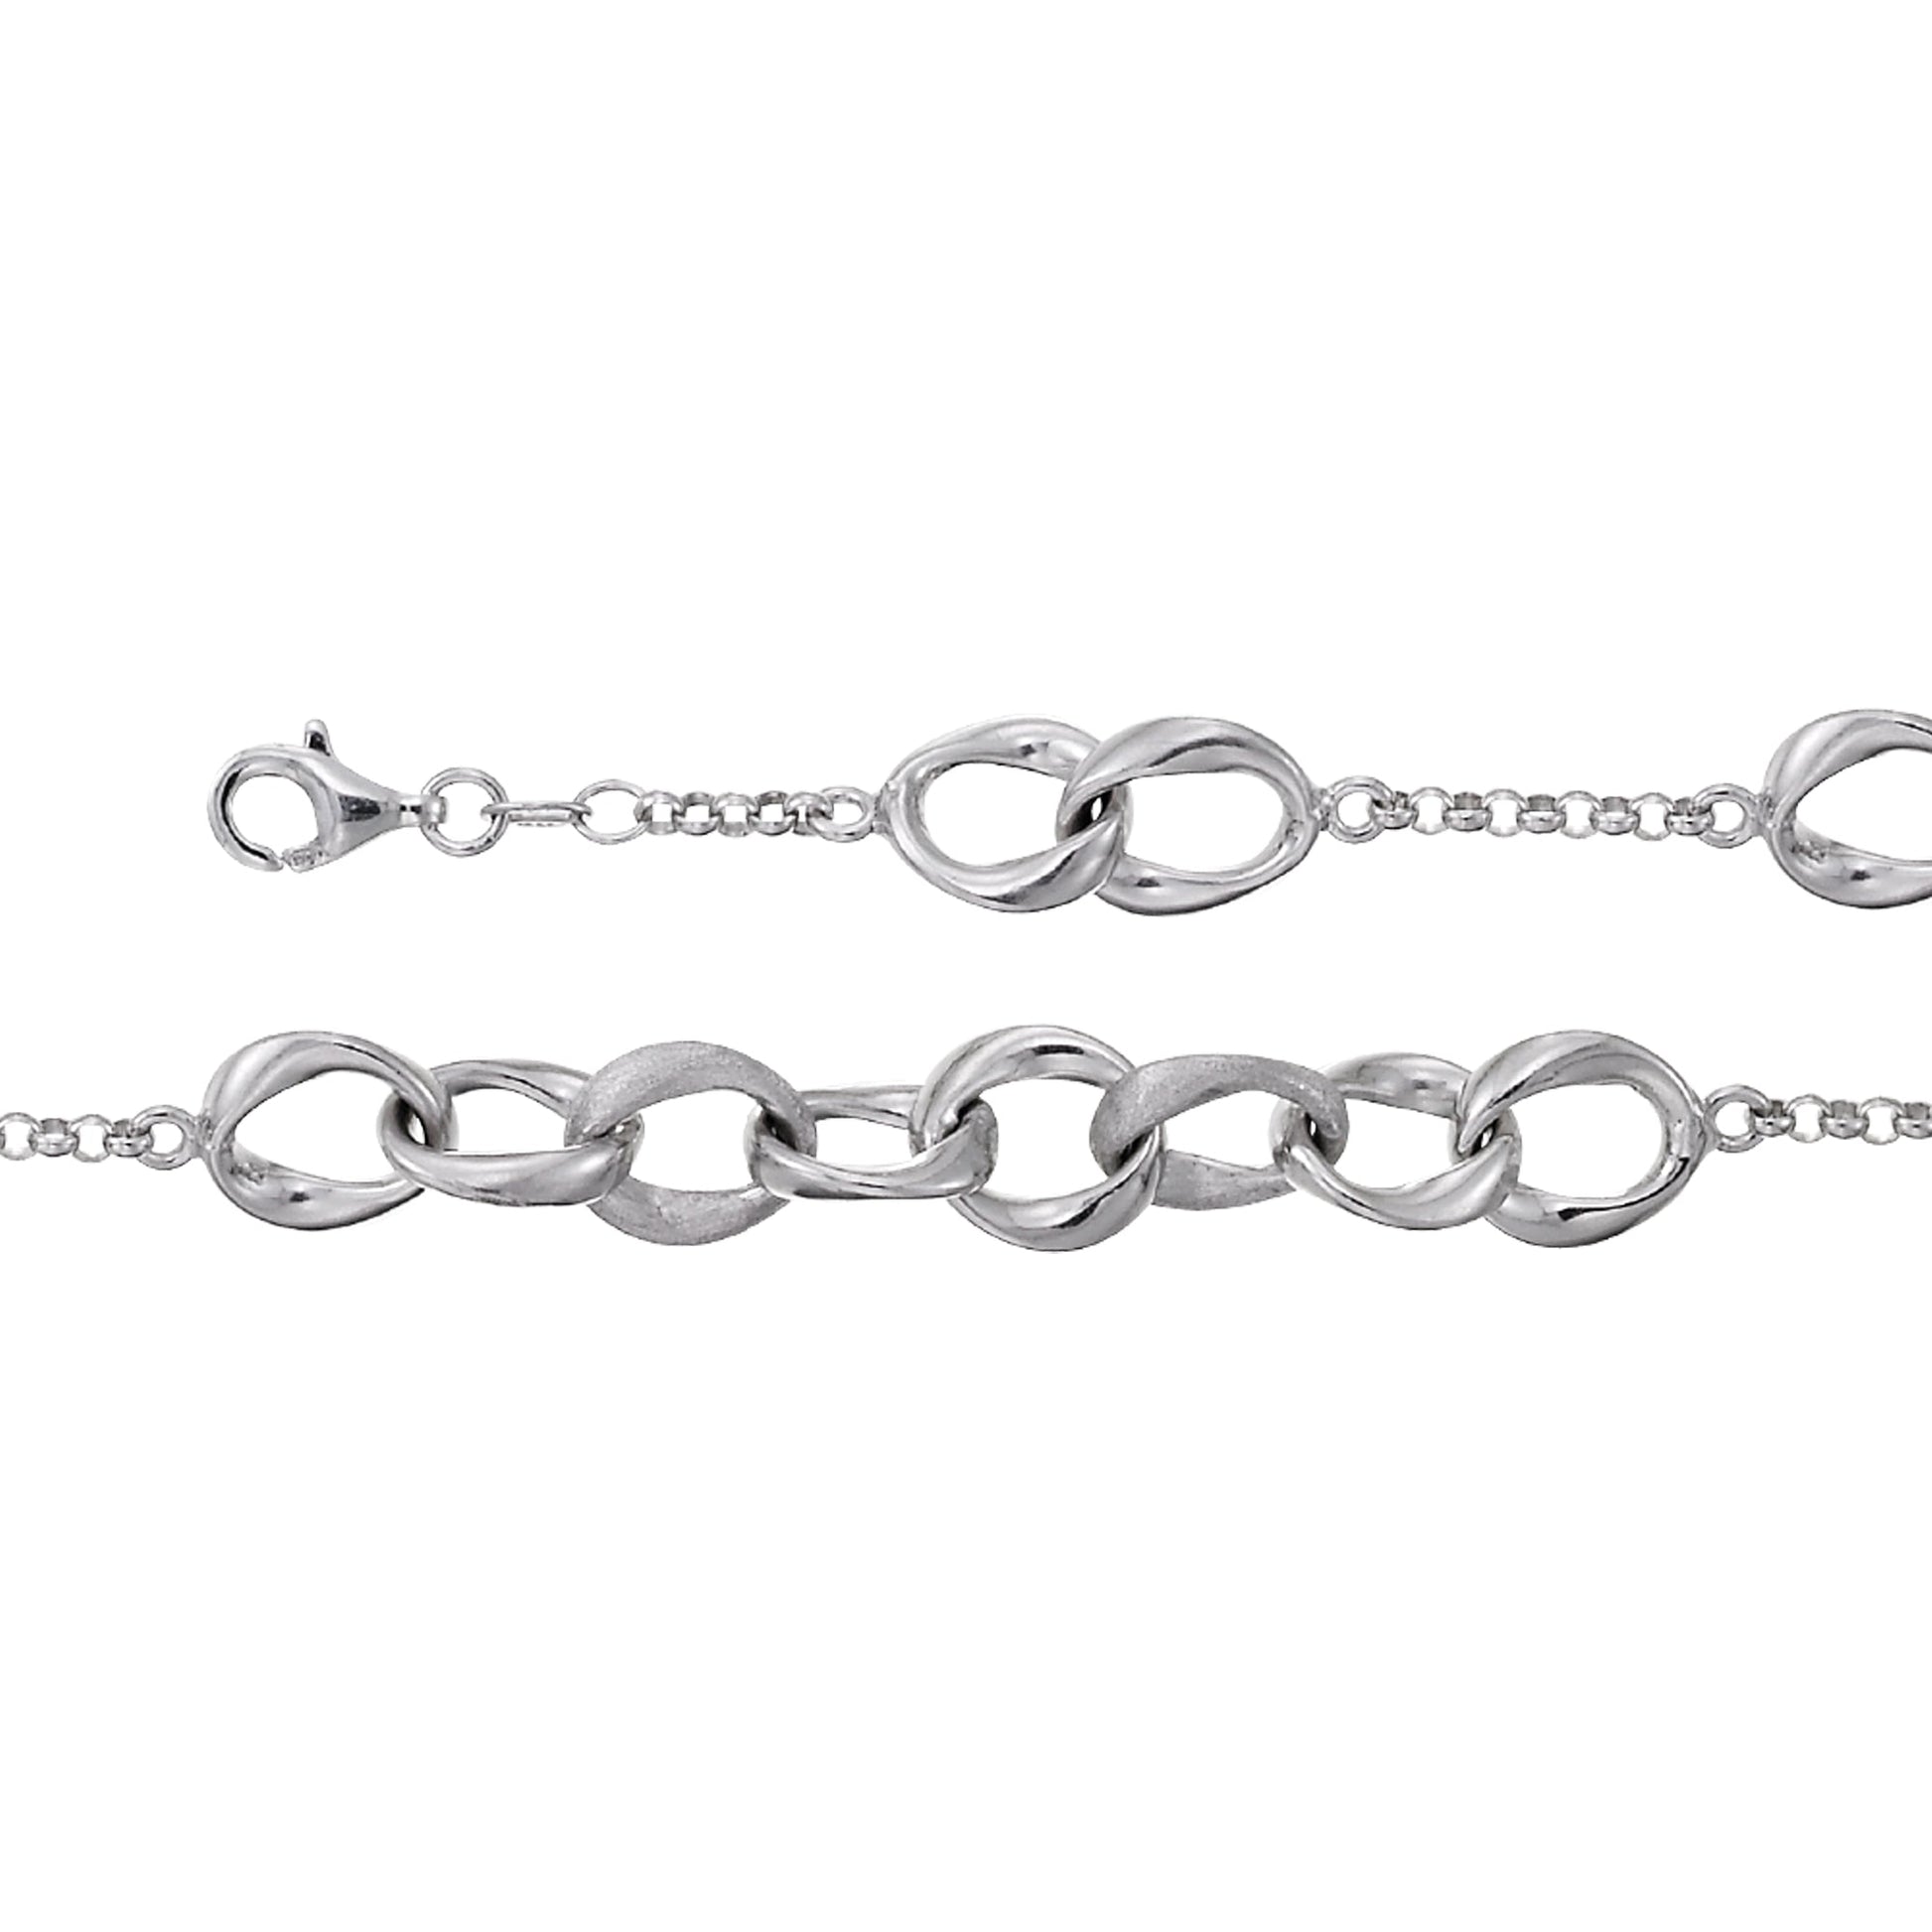 Franco Stellari Italian Sterling Silver Satin/Polished Link Bracelet, 7.5"